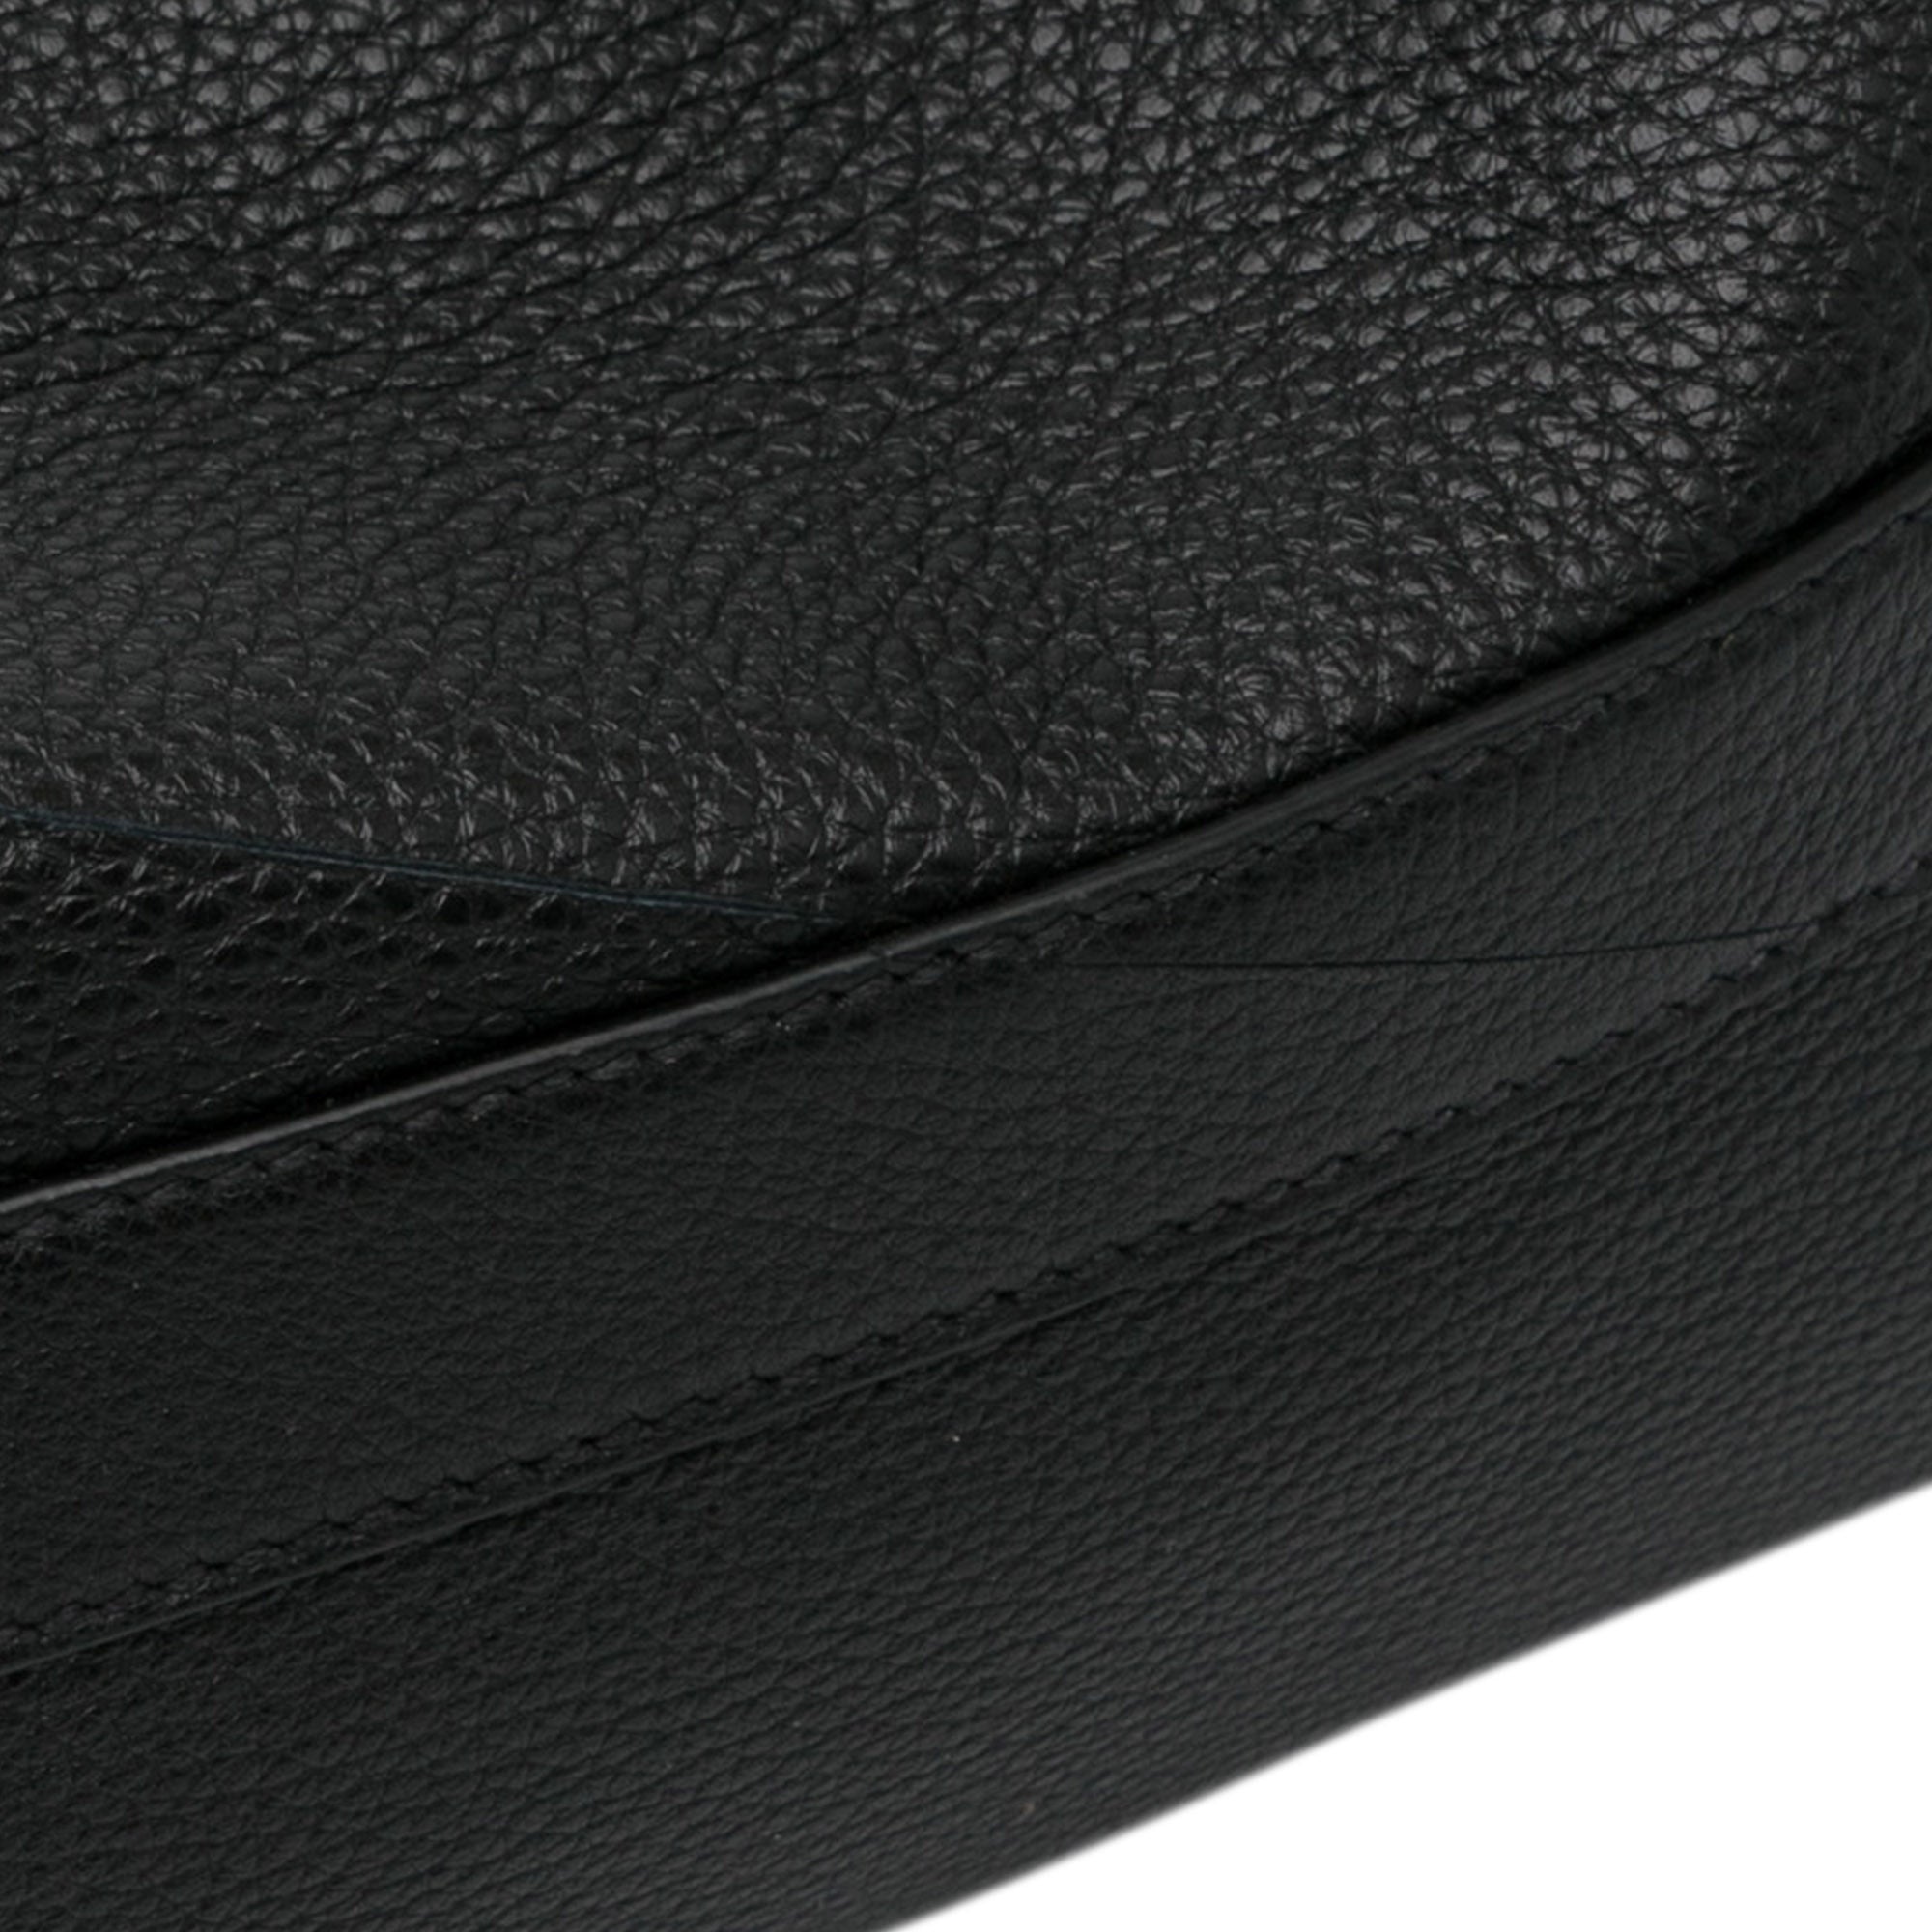 Prada Black Calfskin Embossed Logo Convertible Handbag QNB3MV3PKB003